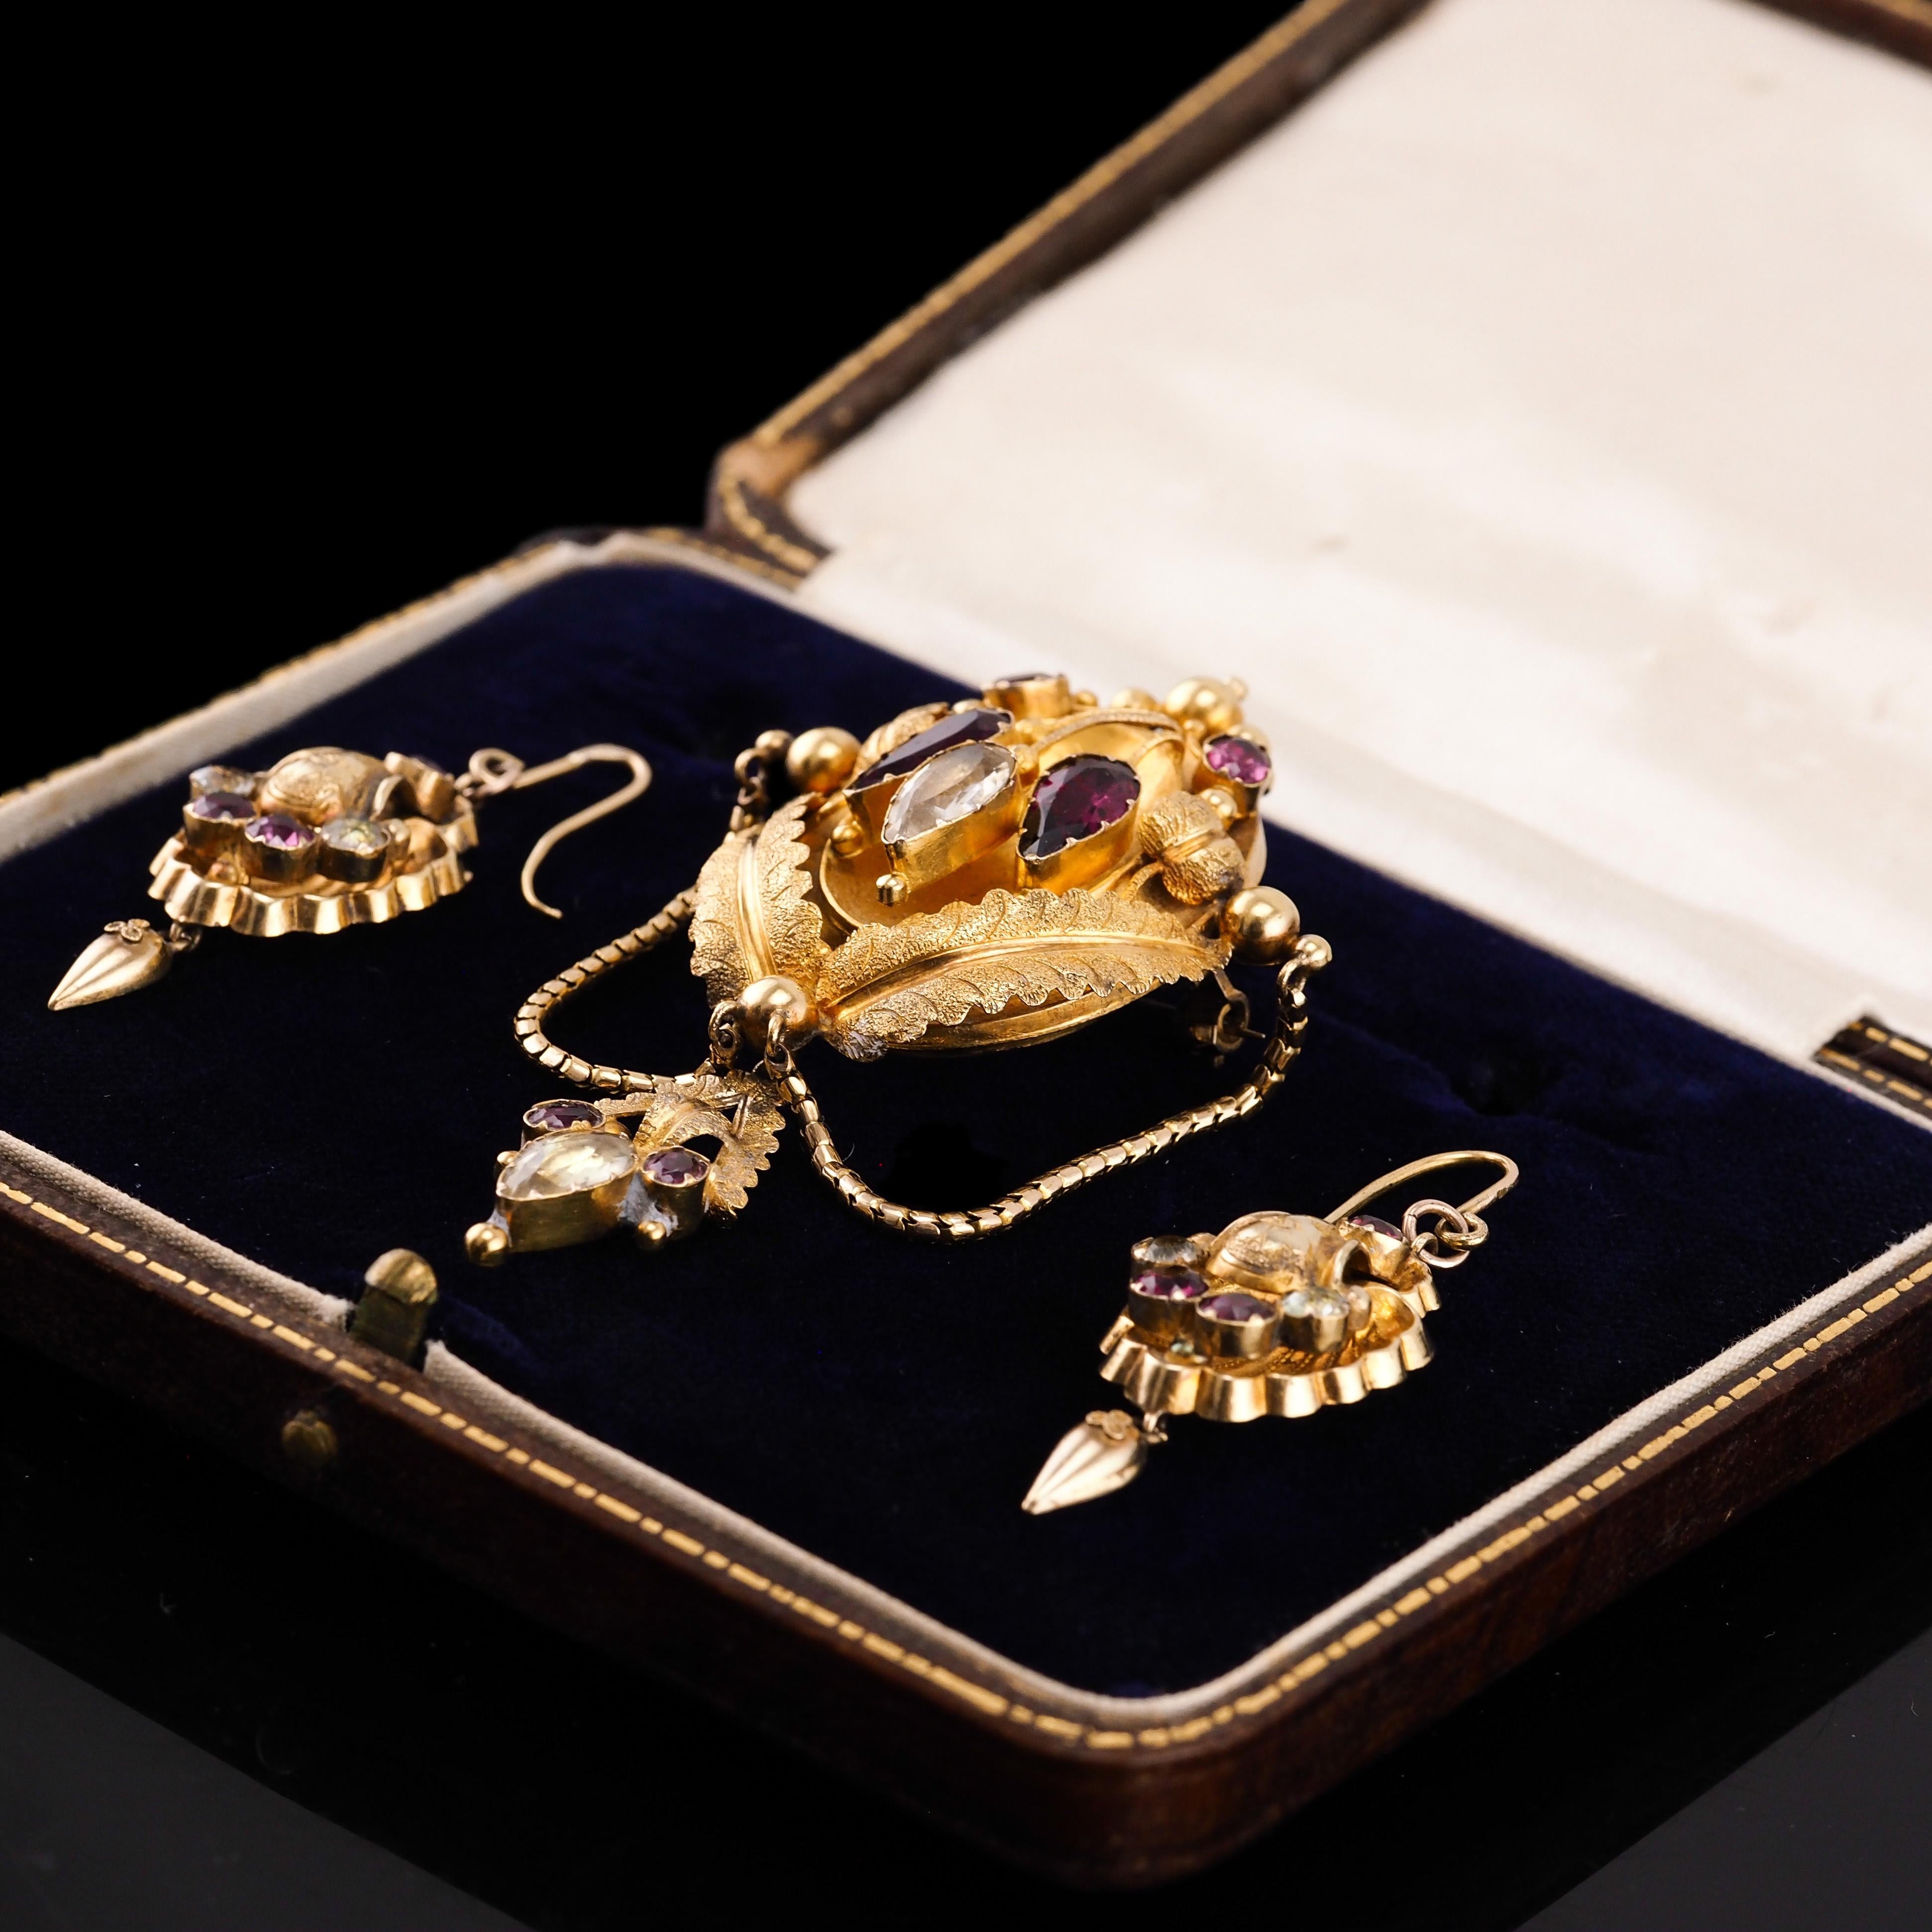 Antique 18K Gold Brooch Pendant & Earrings Garnet & Chrysoberyl - c.1870 9